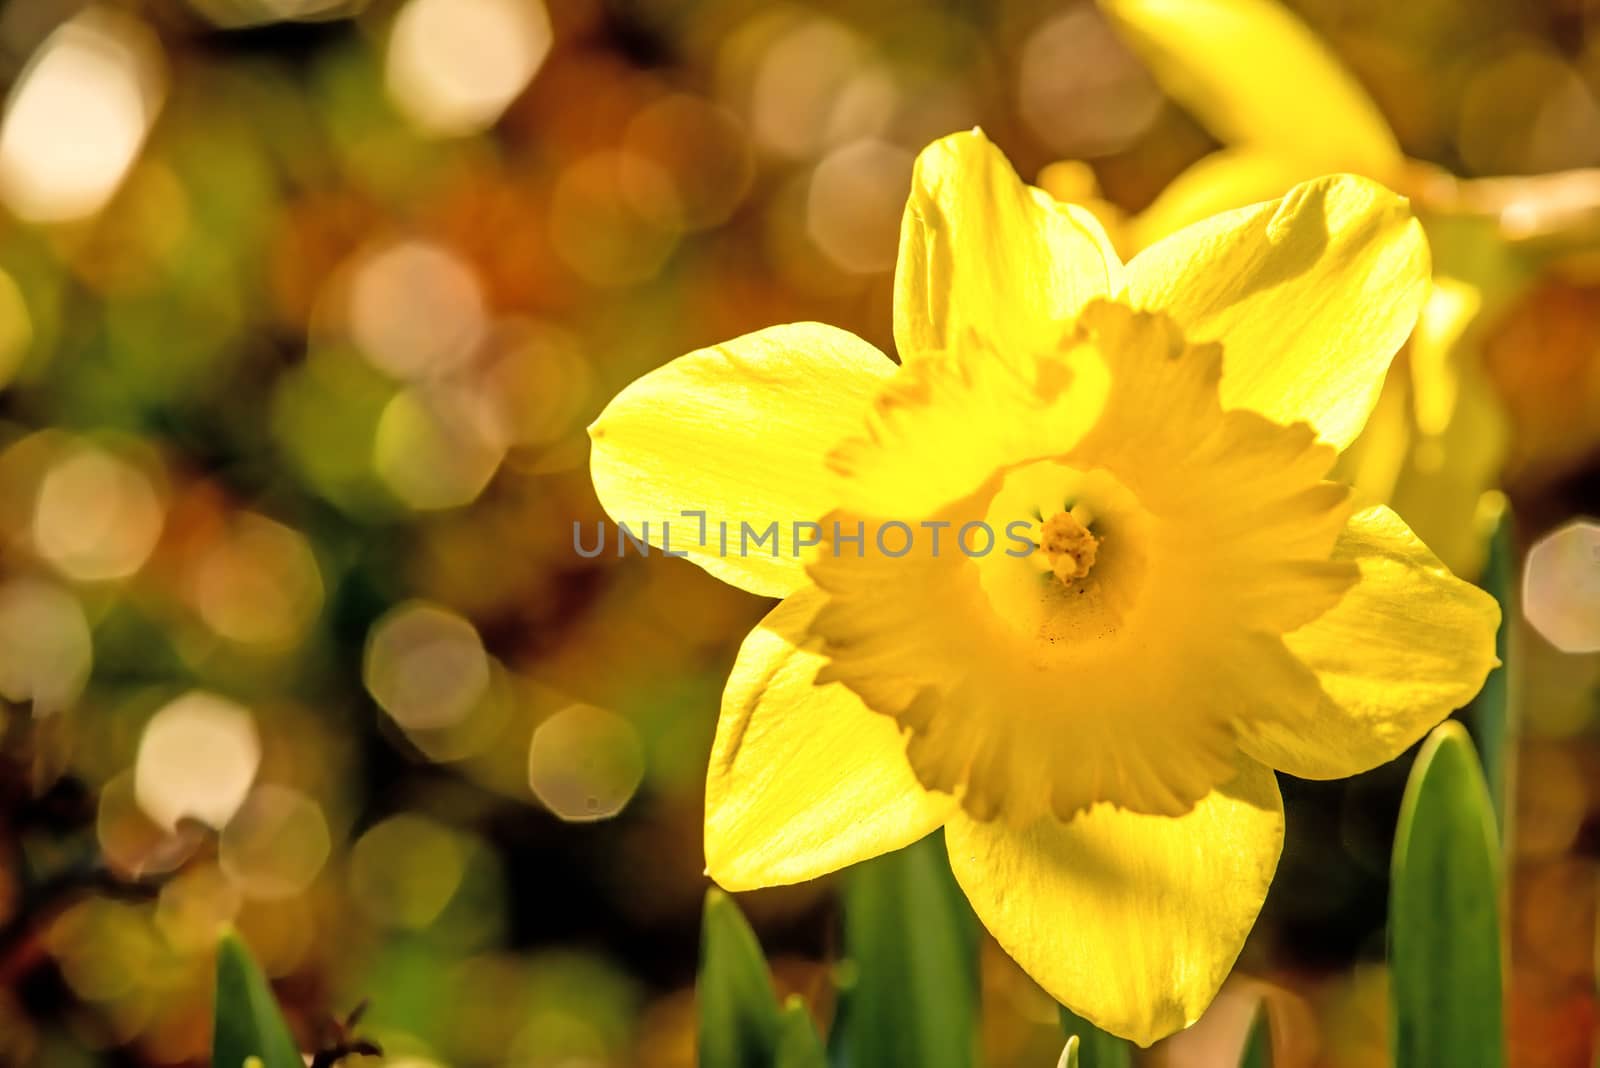 daffodil flower with blurred background by Jochen